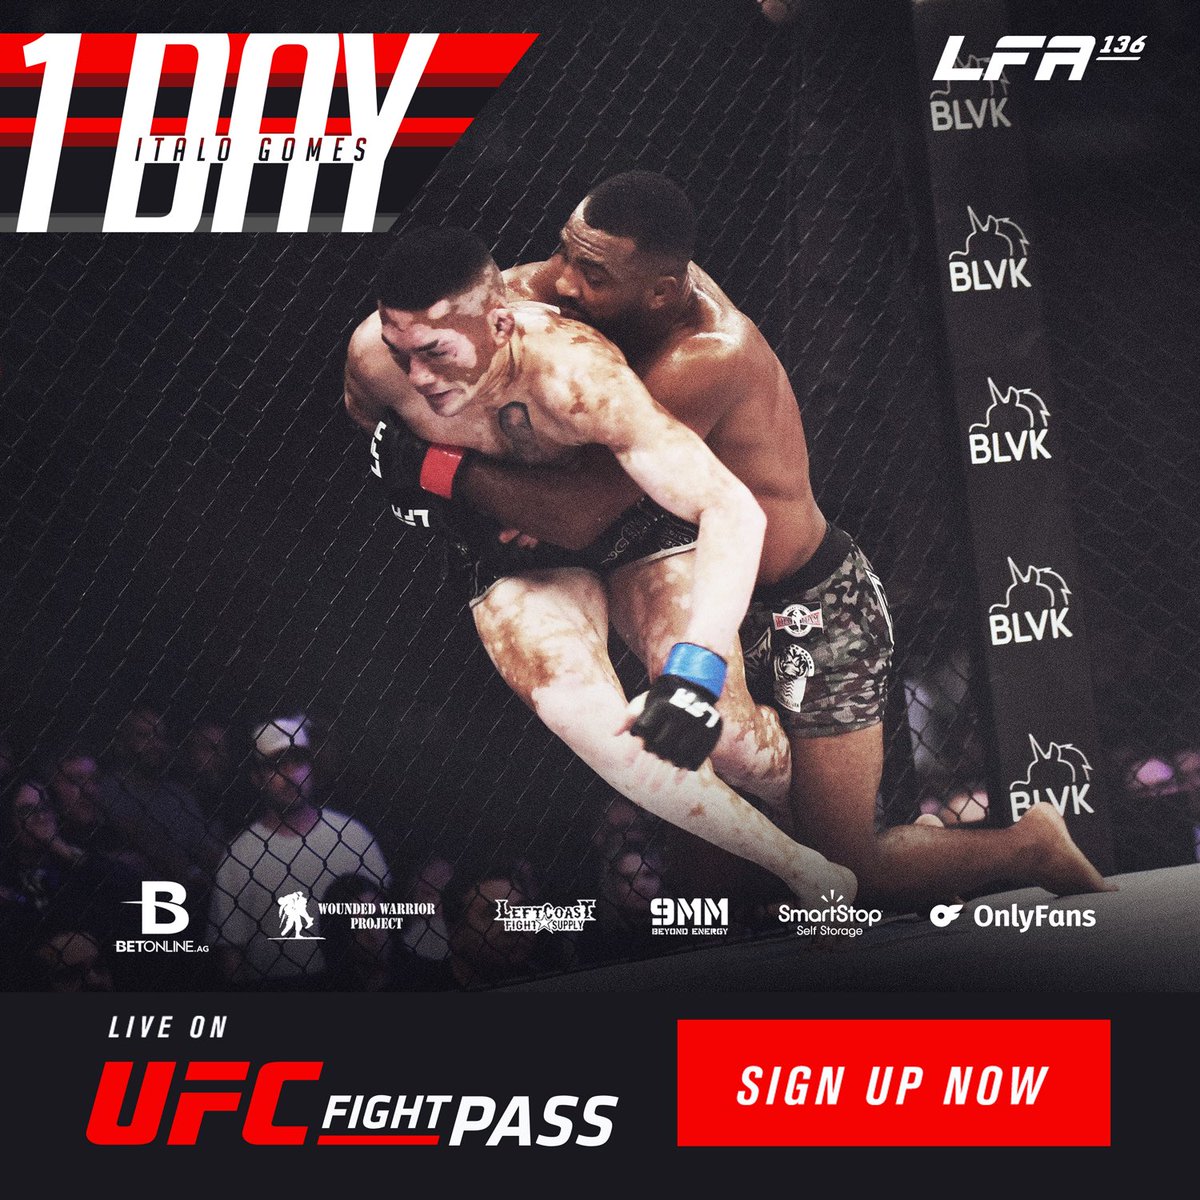 In 1 Day, top prospect #ItaloGomes returns to the @LFAfighting Octagon in the main event of #LFA136! 💥 Friday, July 15 #CEMUG #Caraguatatuba, #SaoPaulo, #Brazil #MMA #LFANation @UFCFightPass